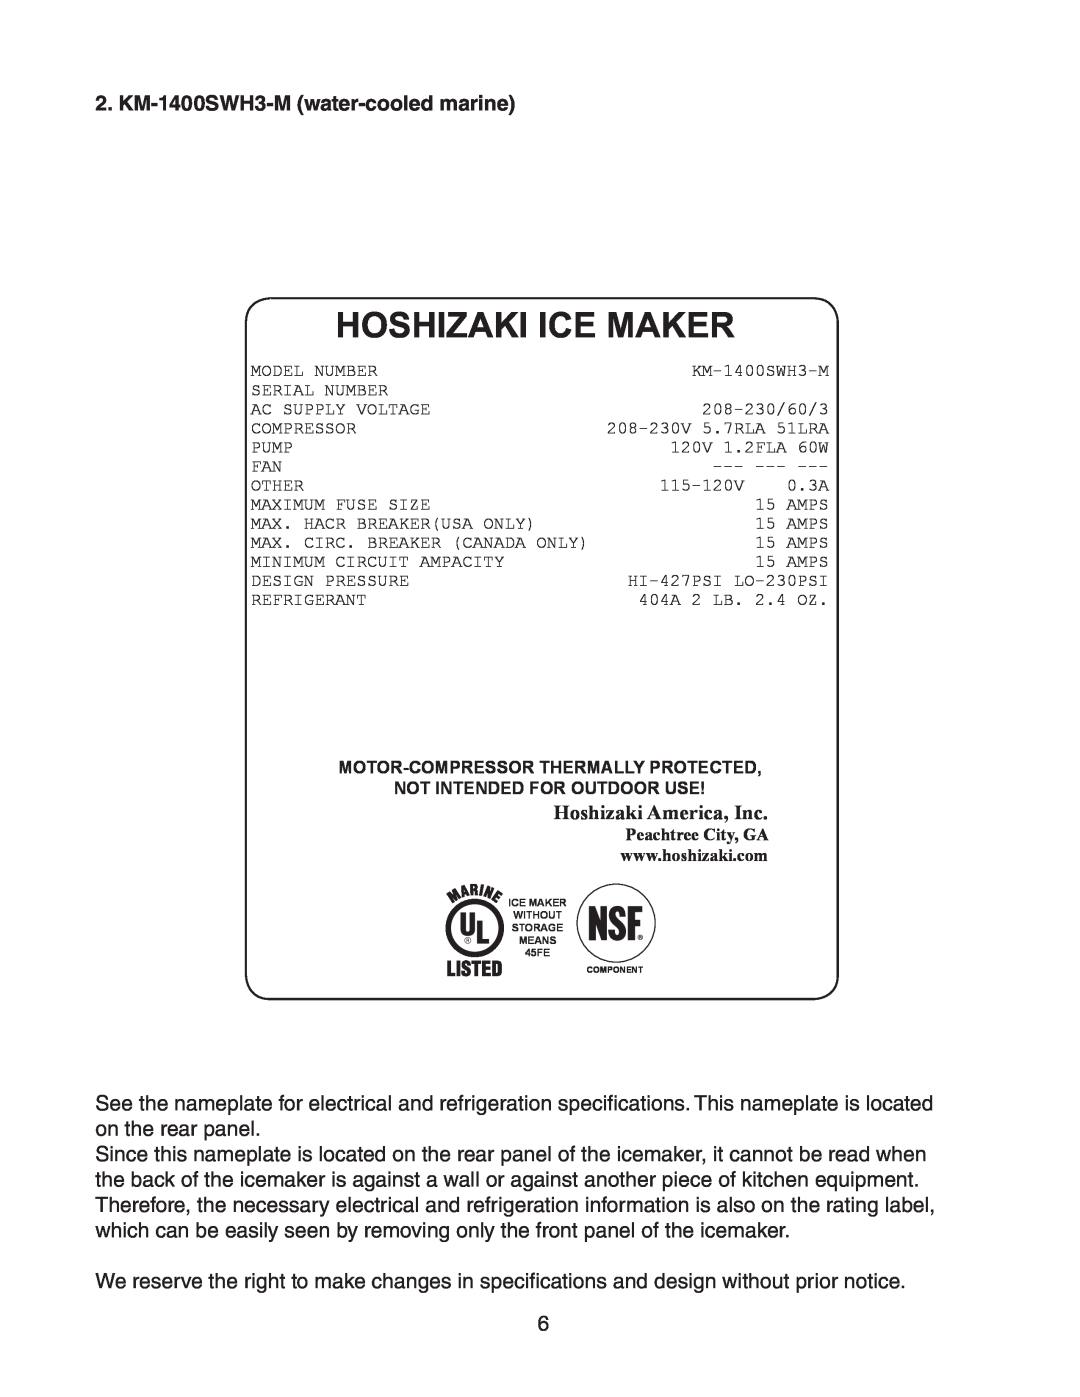 Hoshizaki KM-1400SWH/3-M instruction manual KM-1400SWH3-M water-cooledmarine, Hoshizaki Ice Maker, Hoshizaki America, Inc 